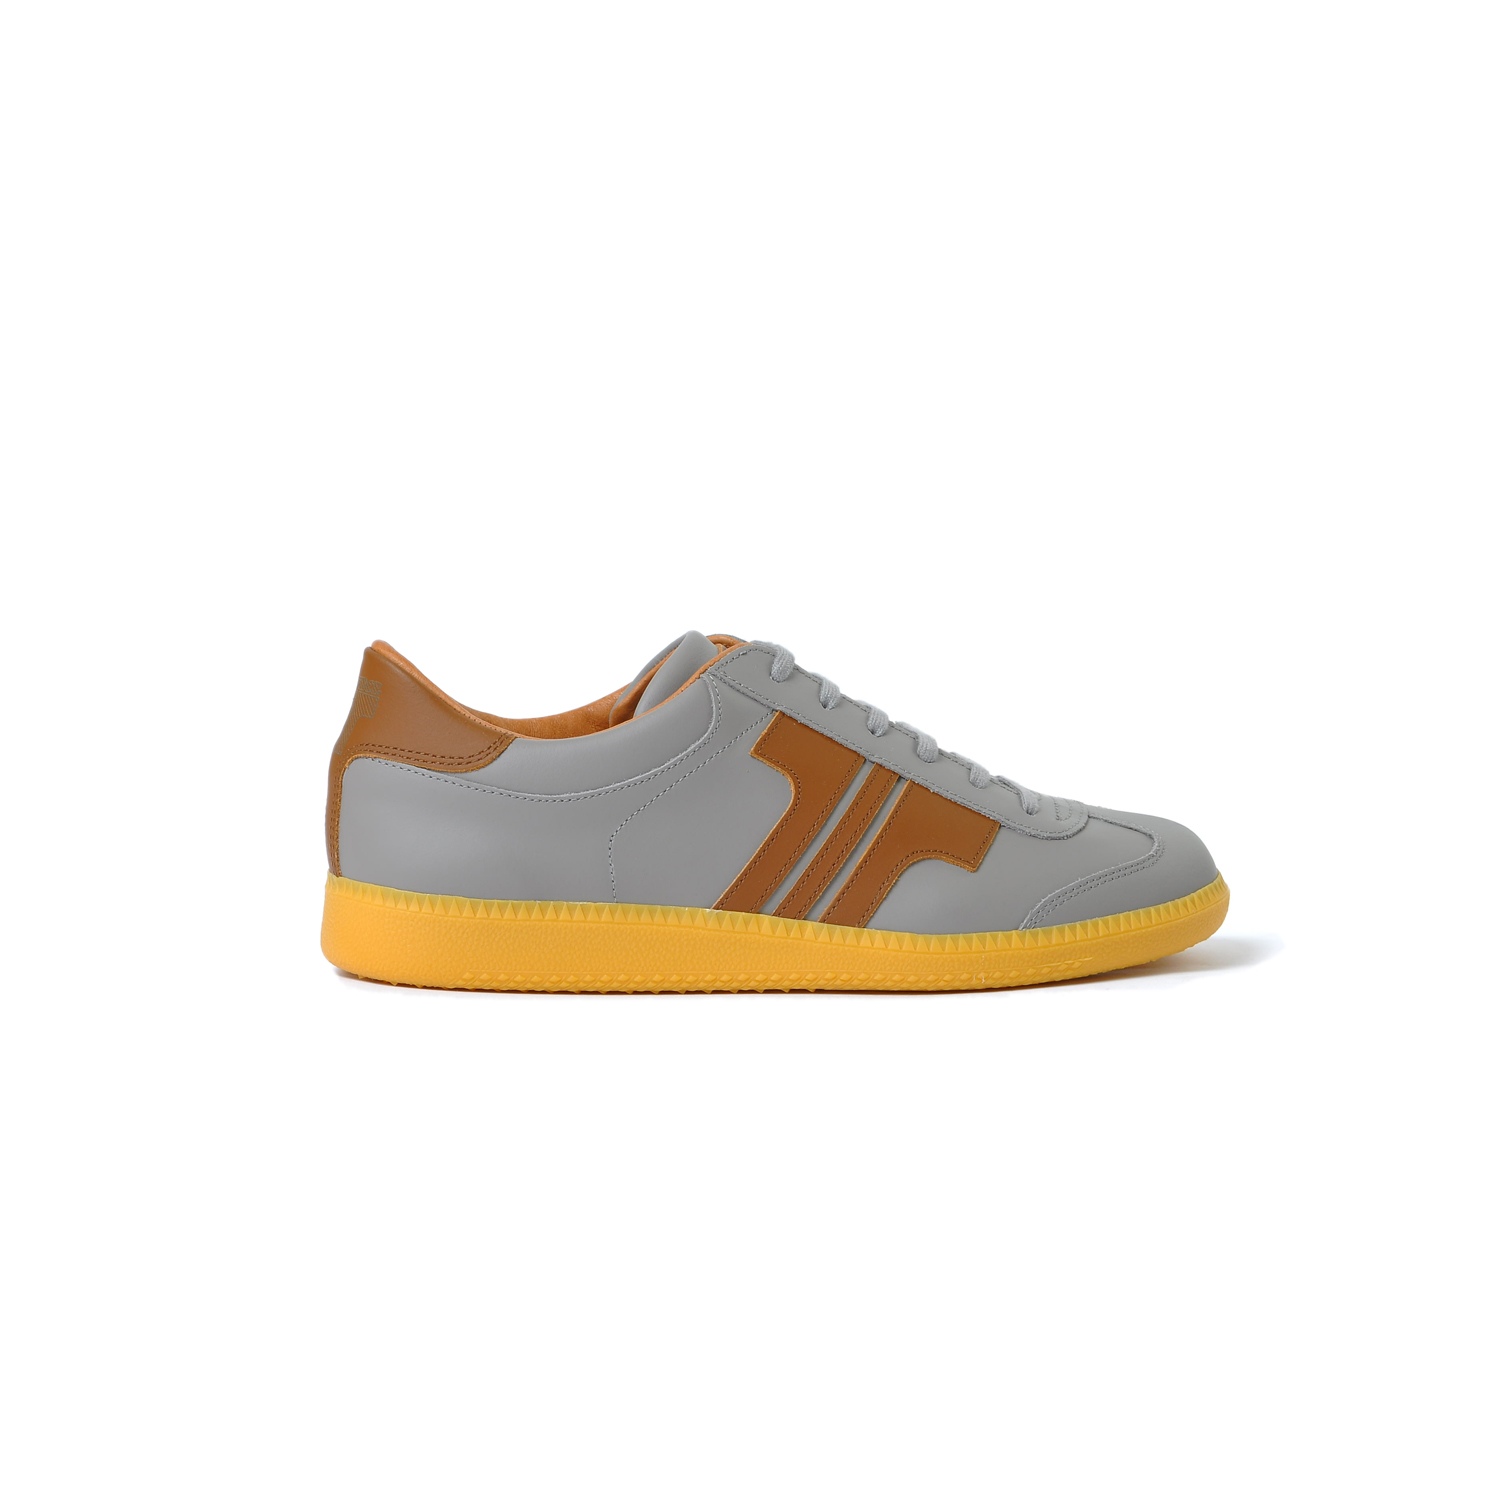 Tisza shoes - Compakt - Grey-bronze